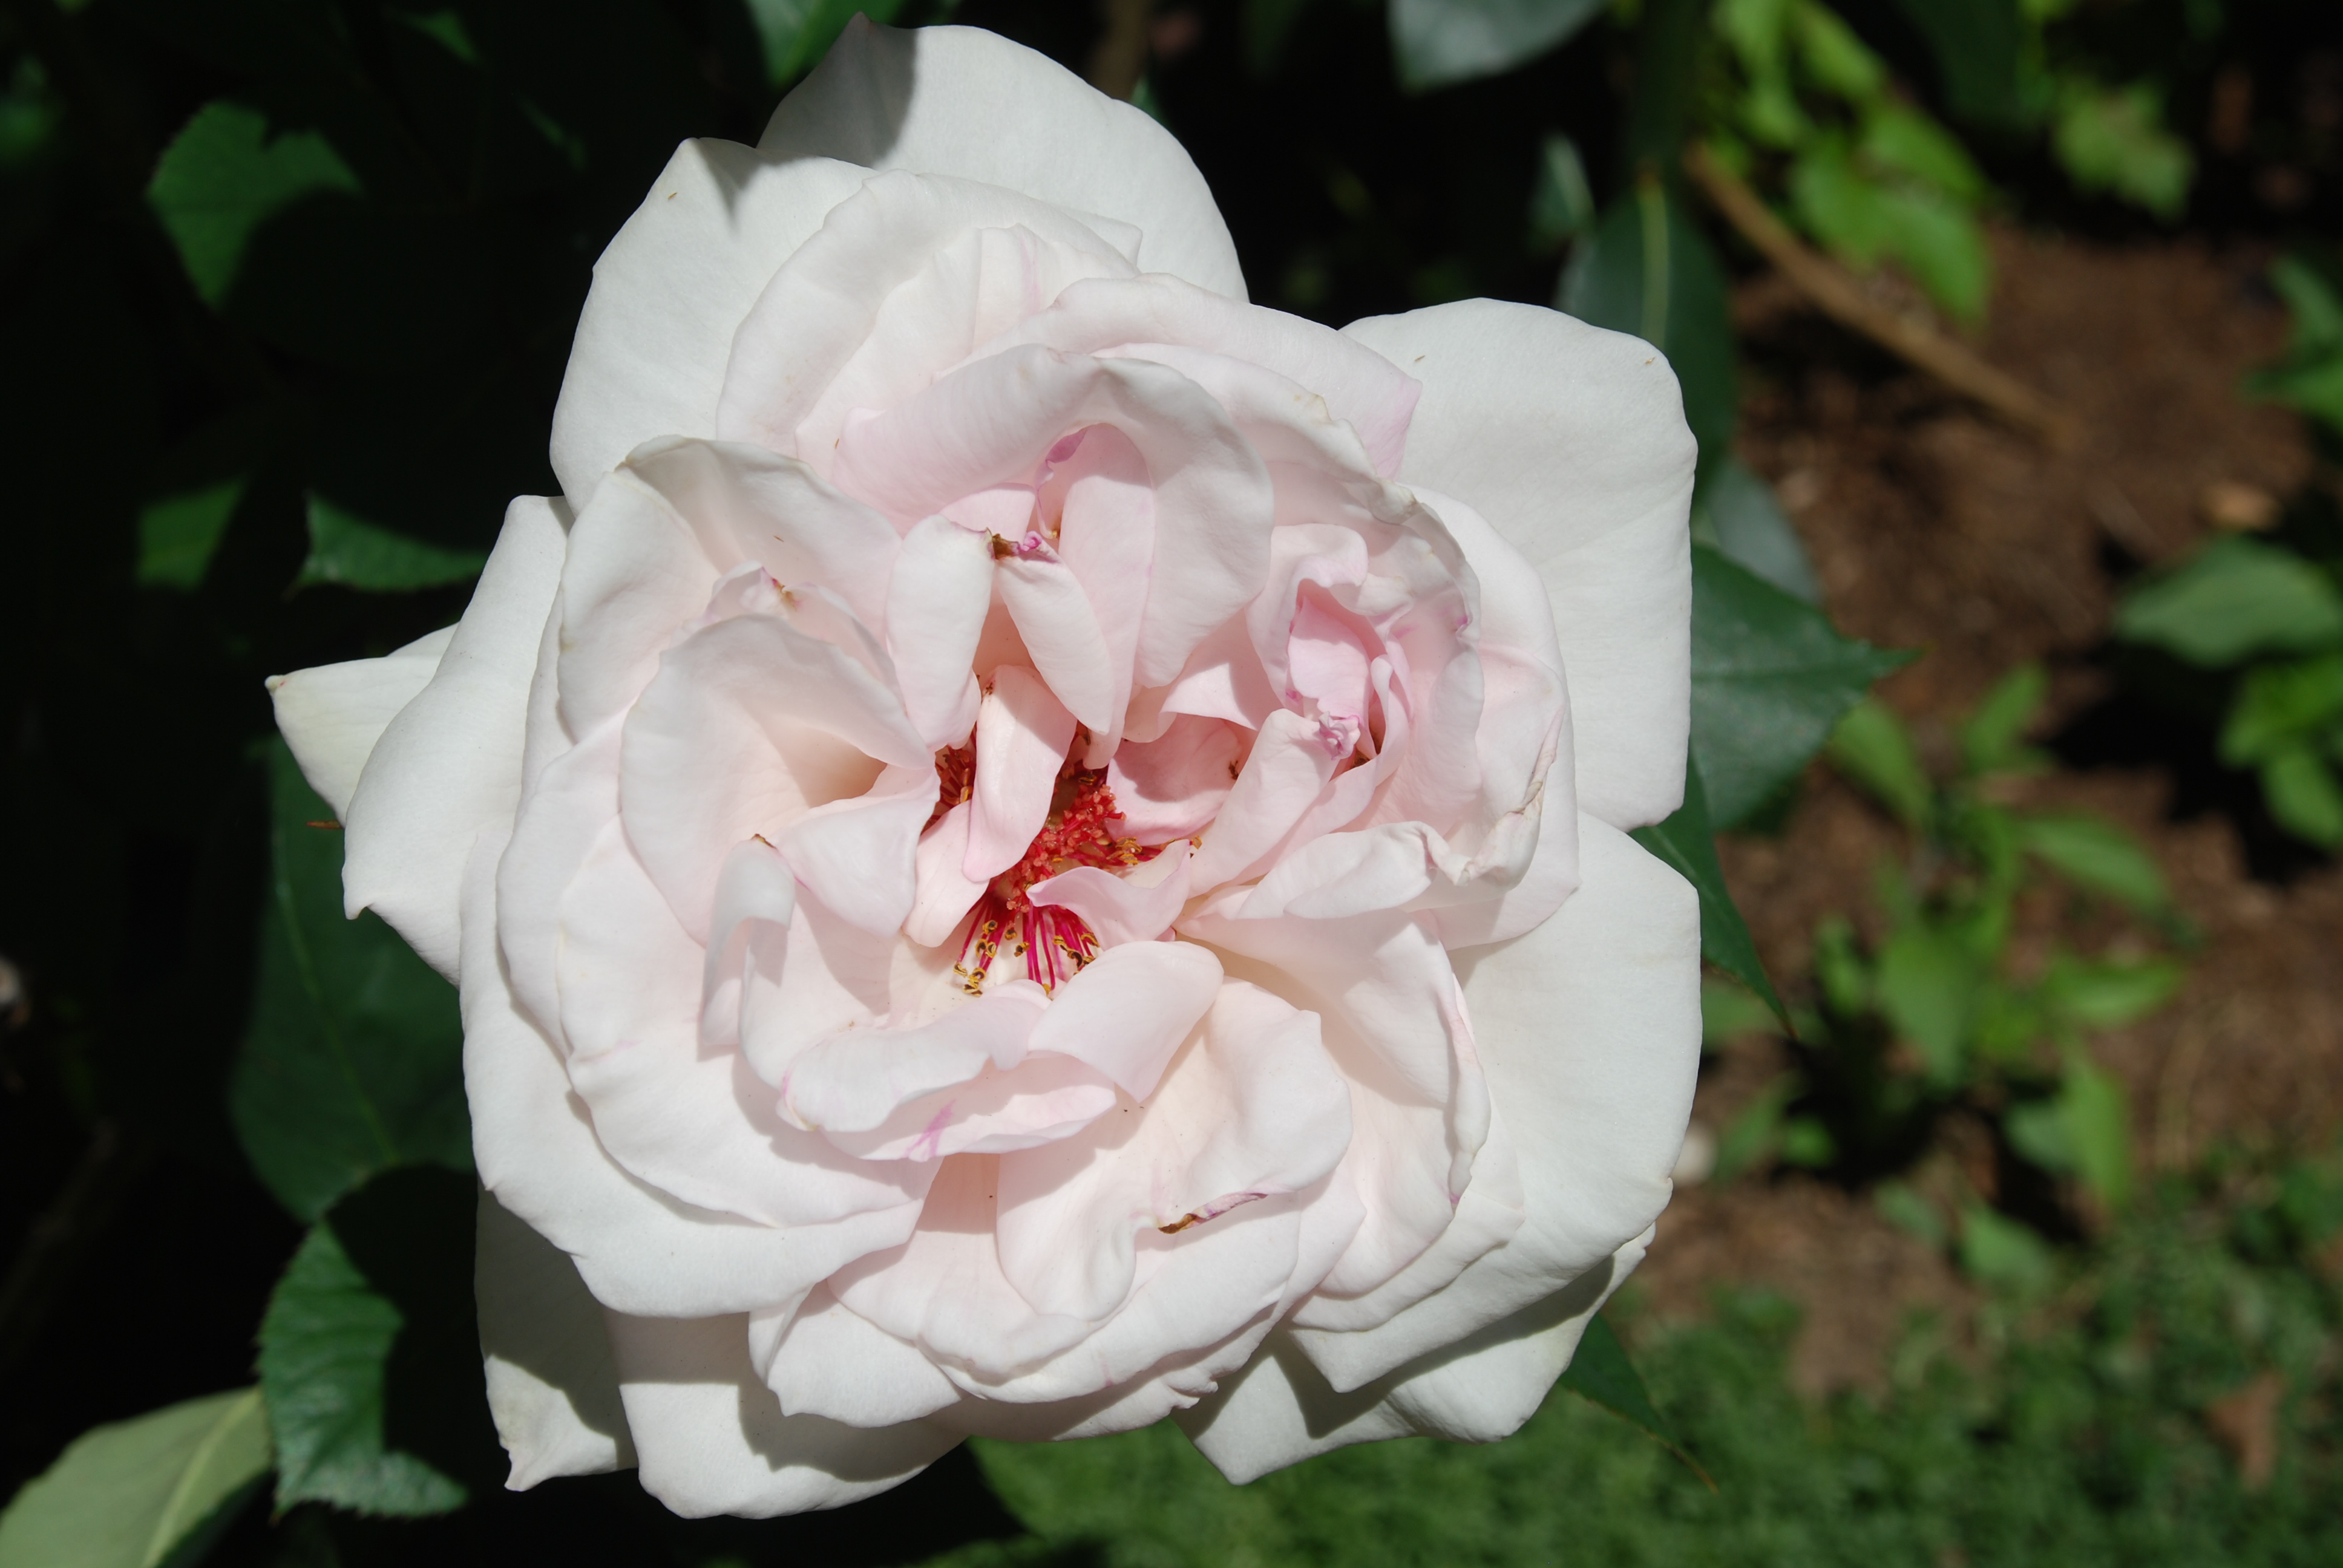 White rose, May,2021, Kelley's Garden.